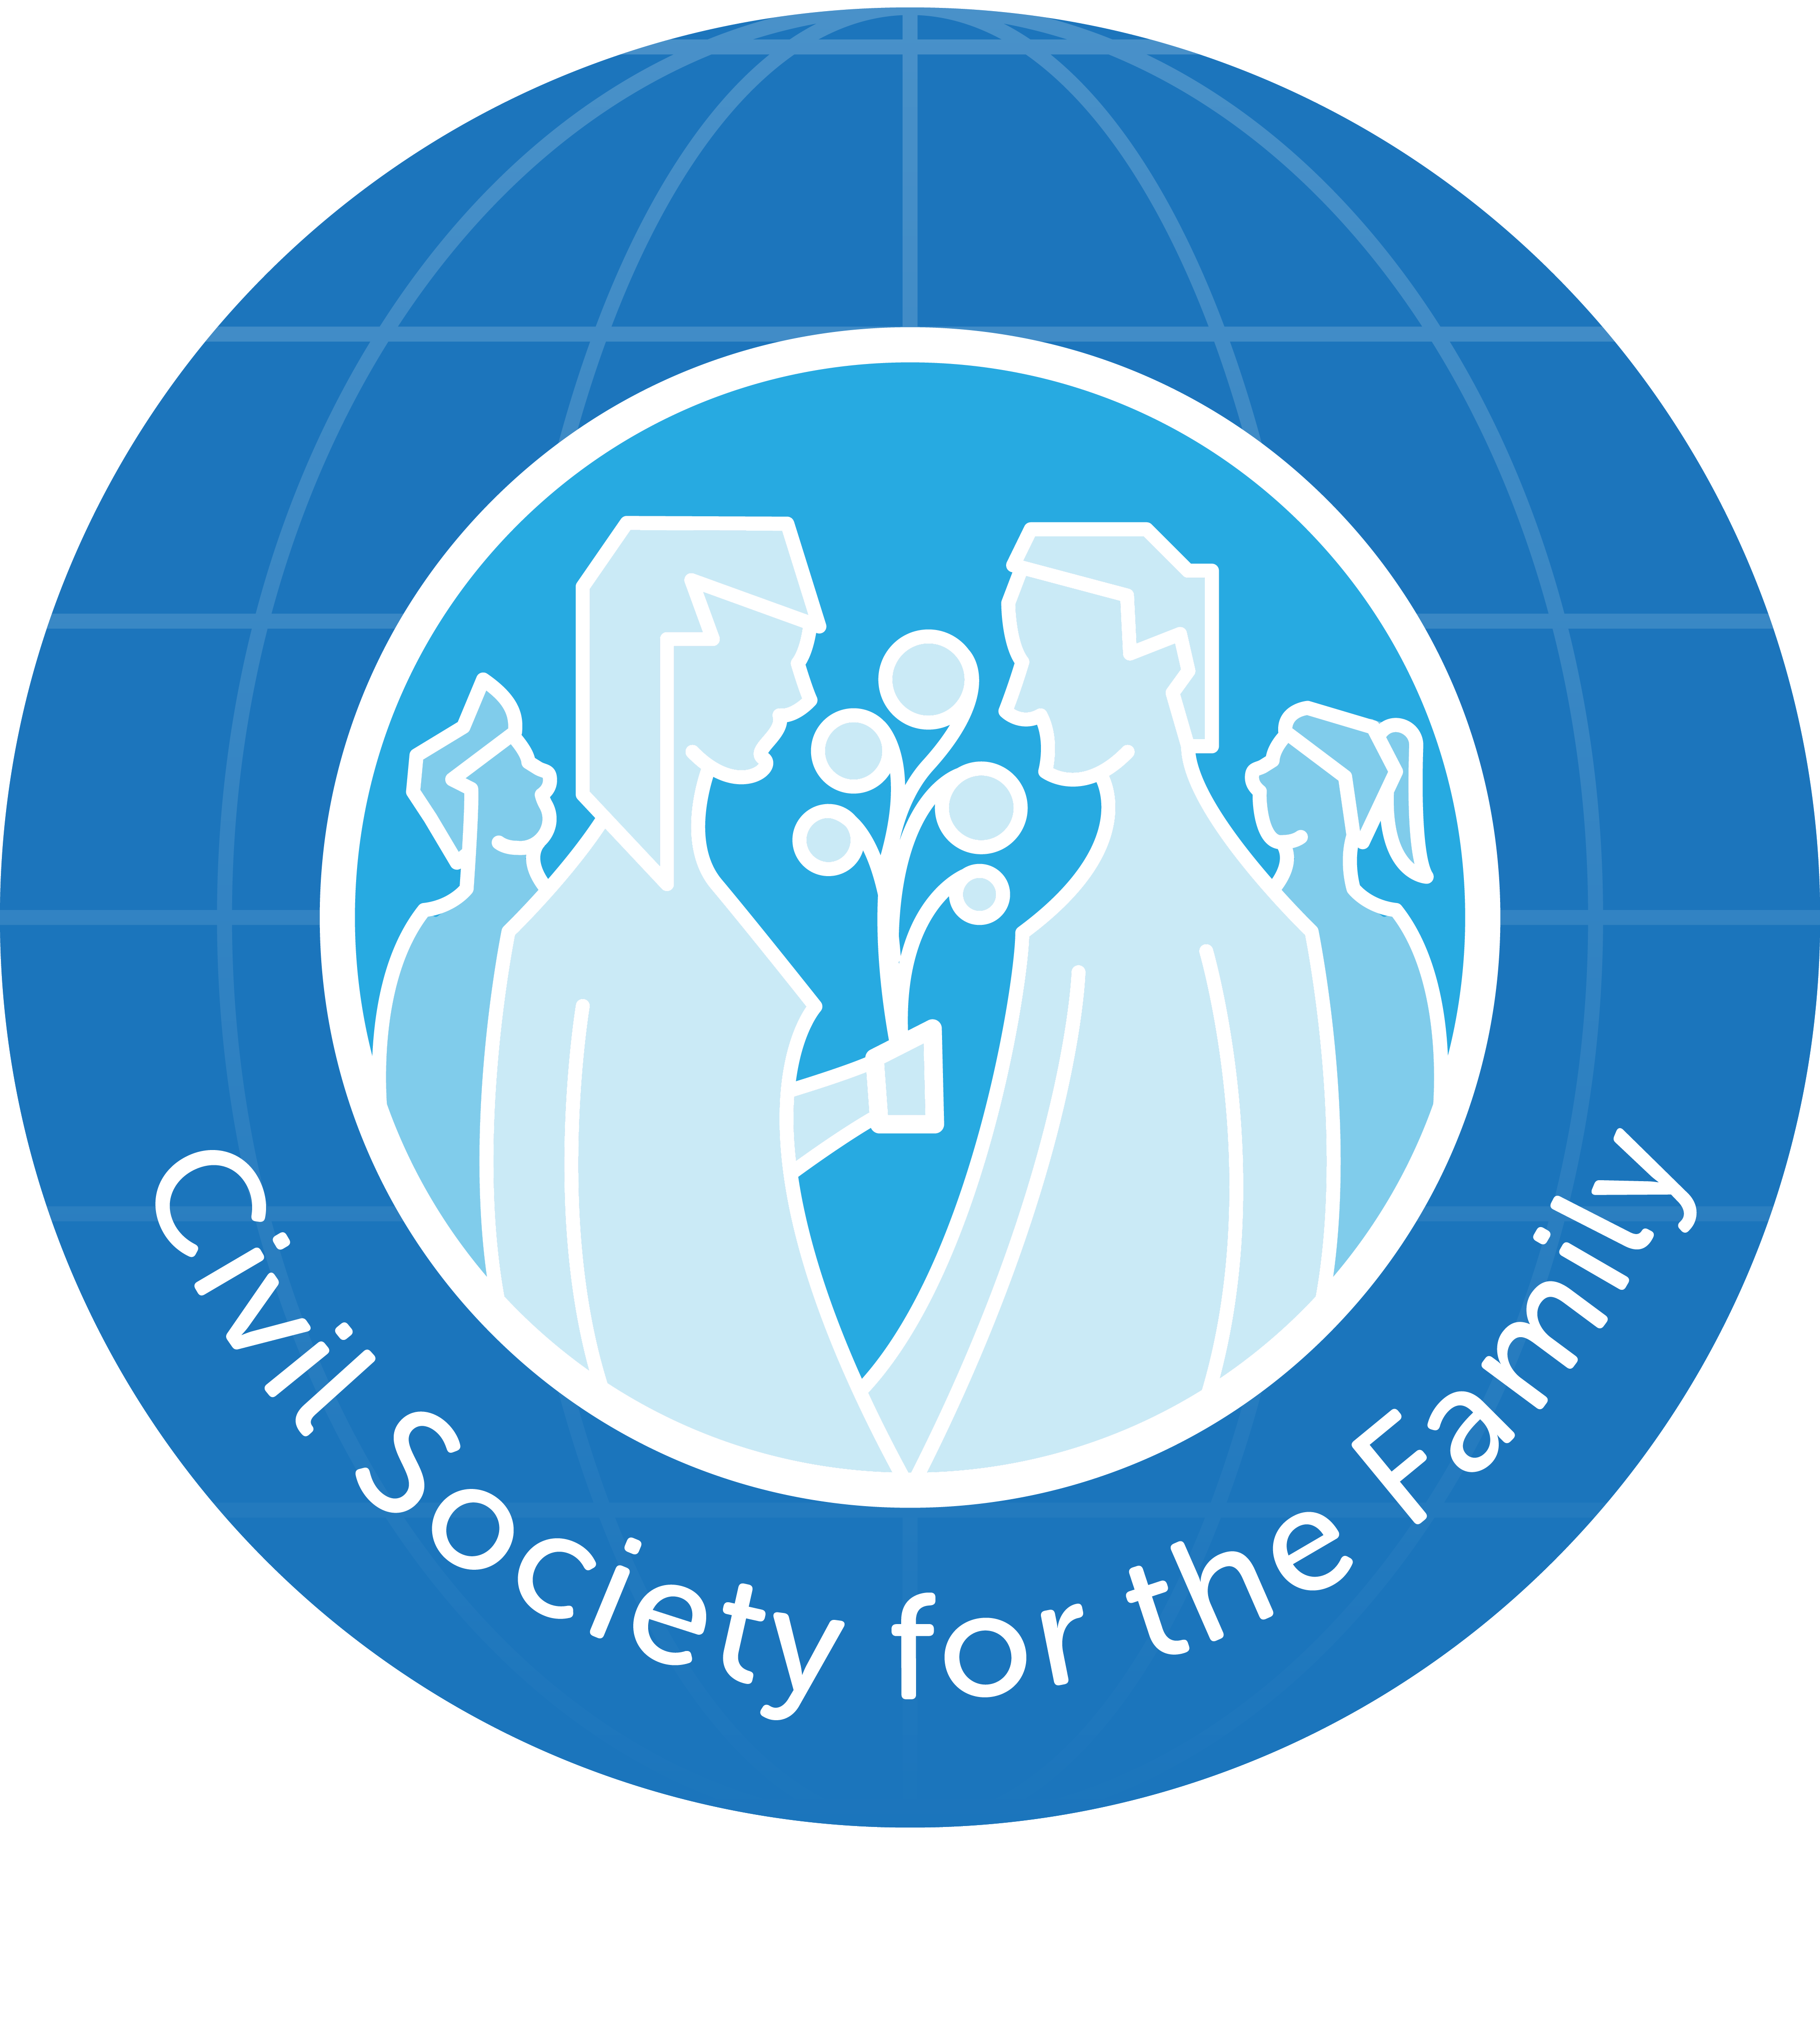 Civil society. Общество логотип. Эмблемы по обществу. СОЦИУМ логотип. Общество будущего эмблема.